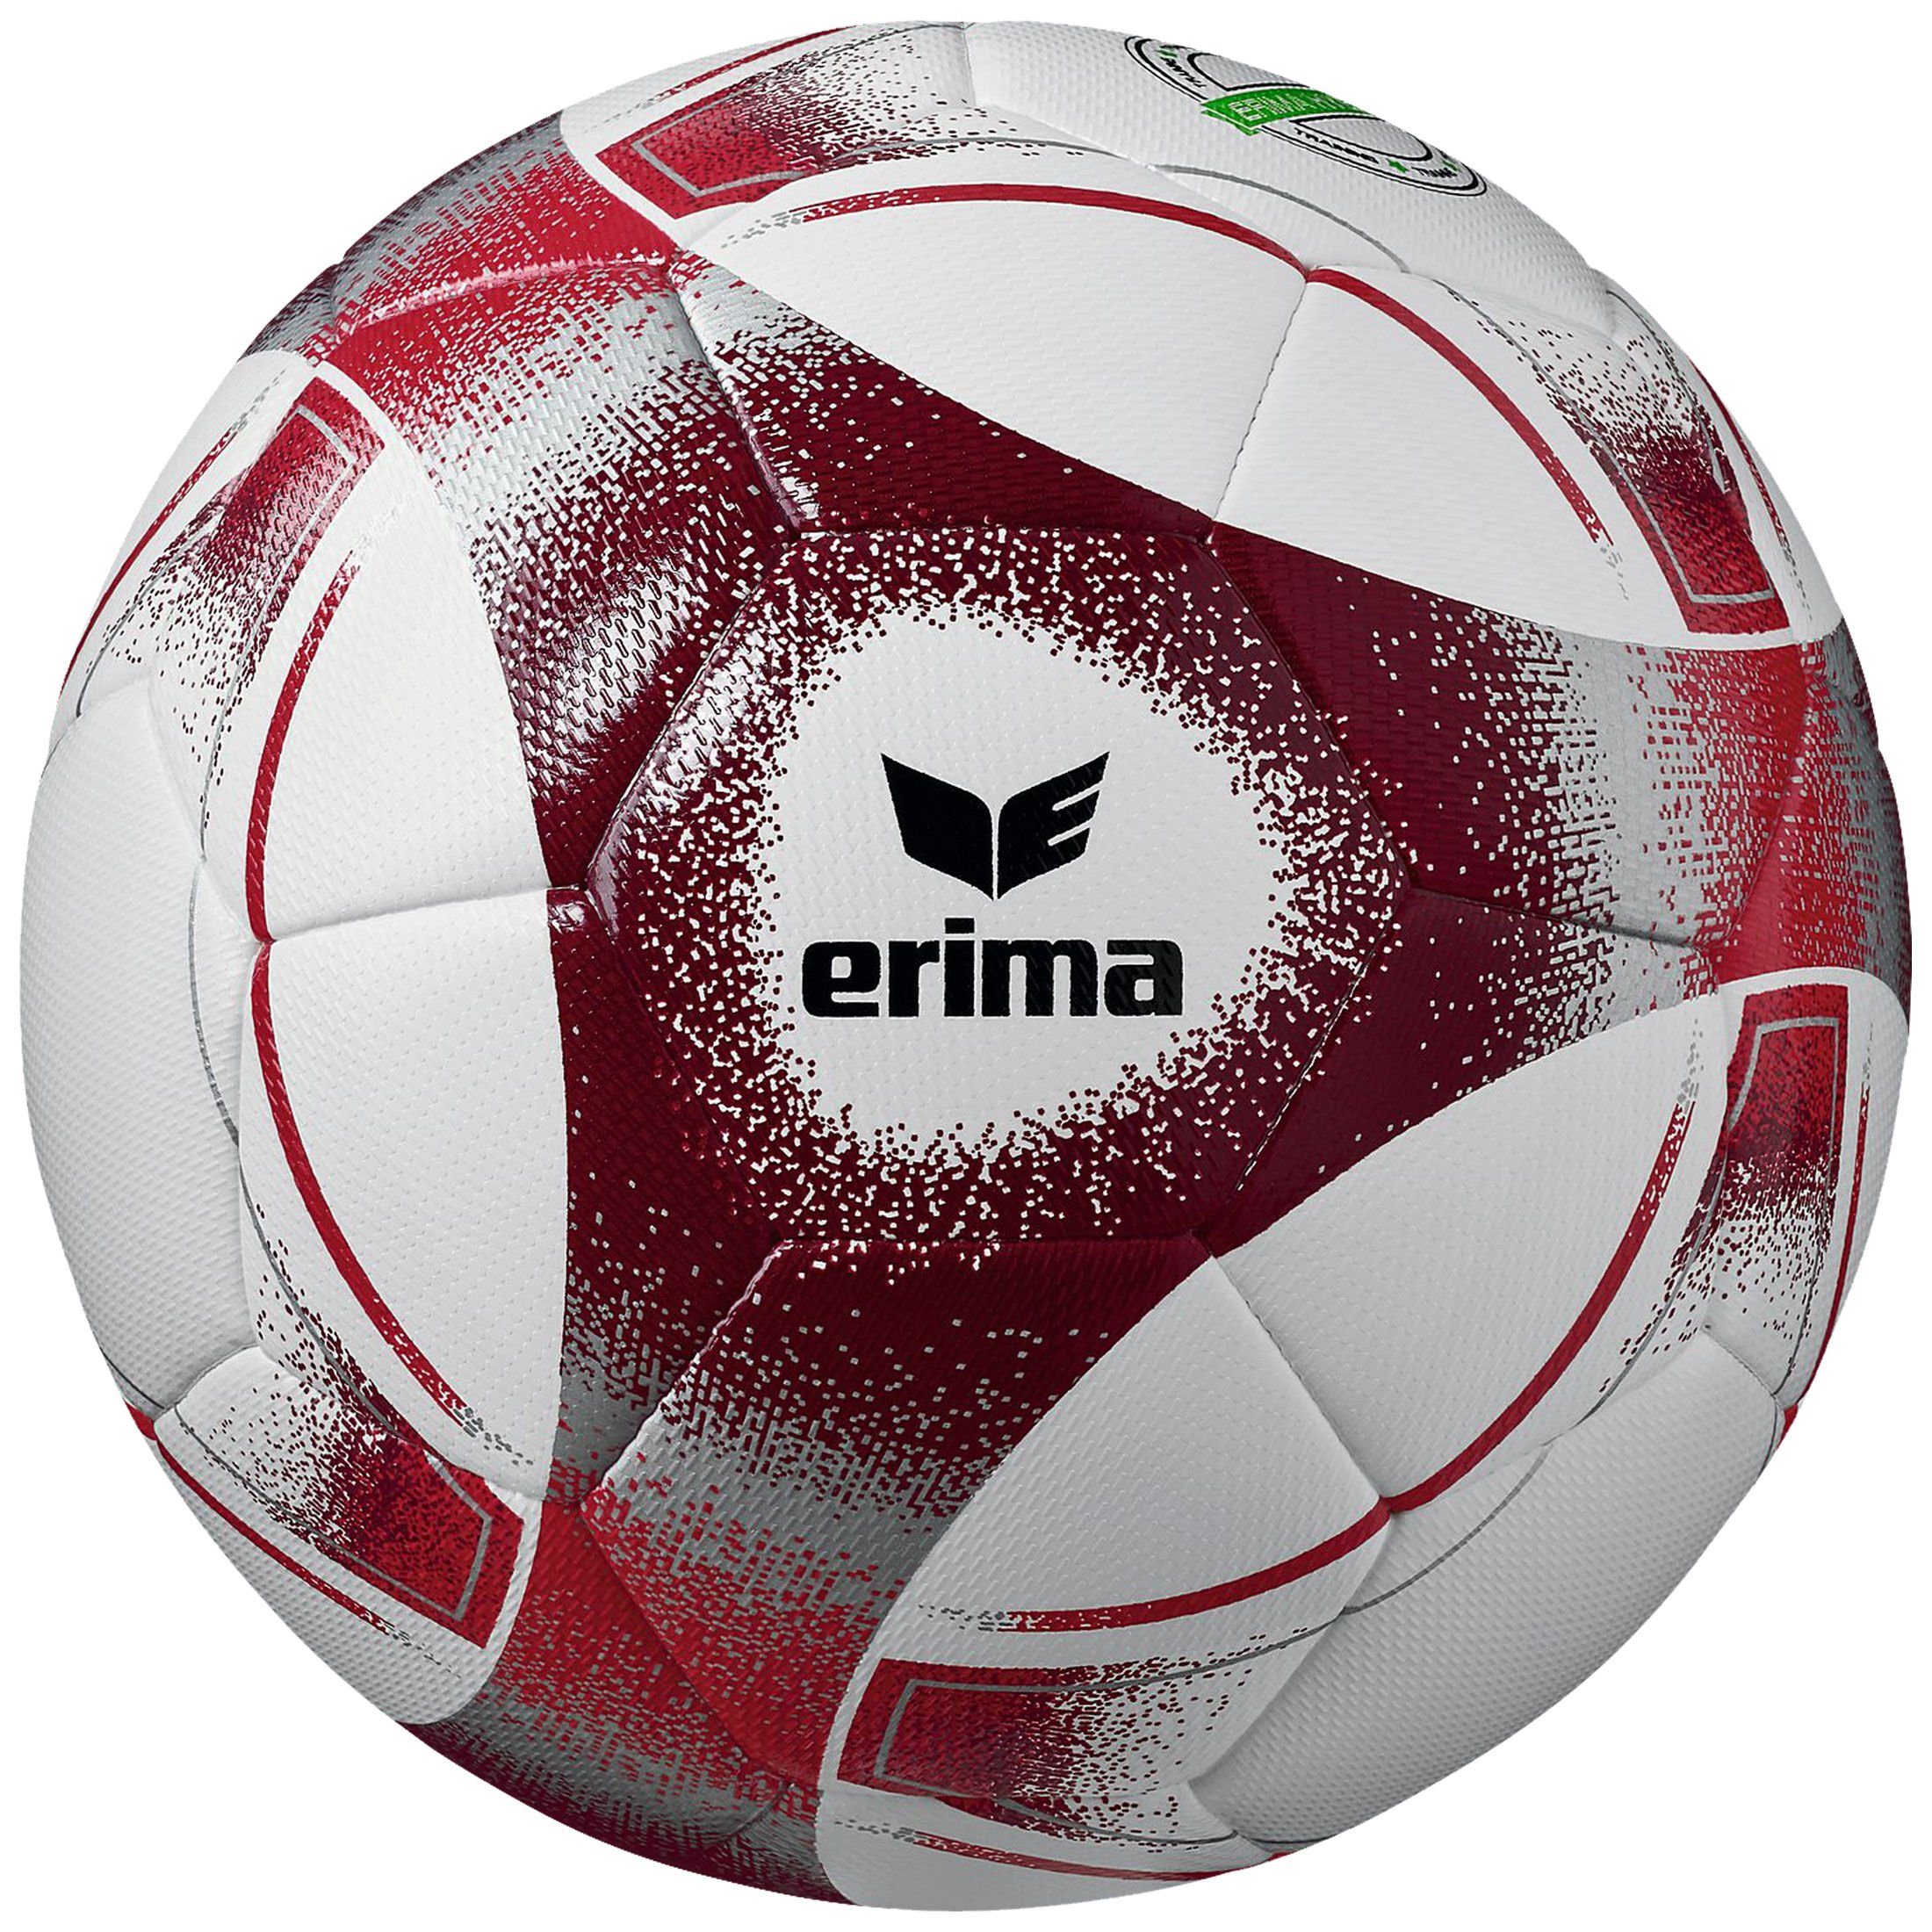 Fußball Fußball Hybrid Training rot bordeaux / Erima